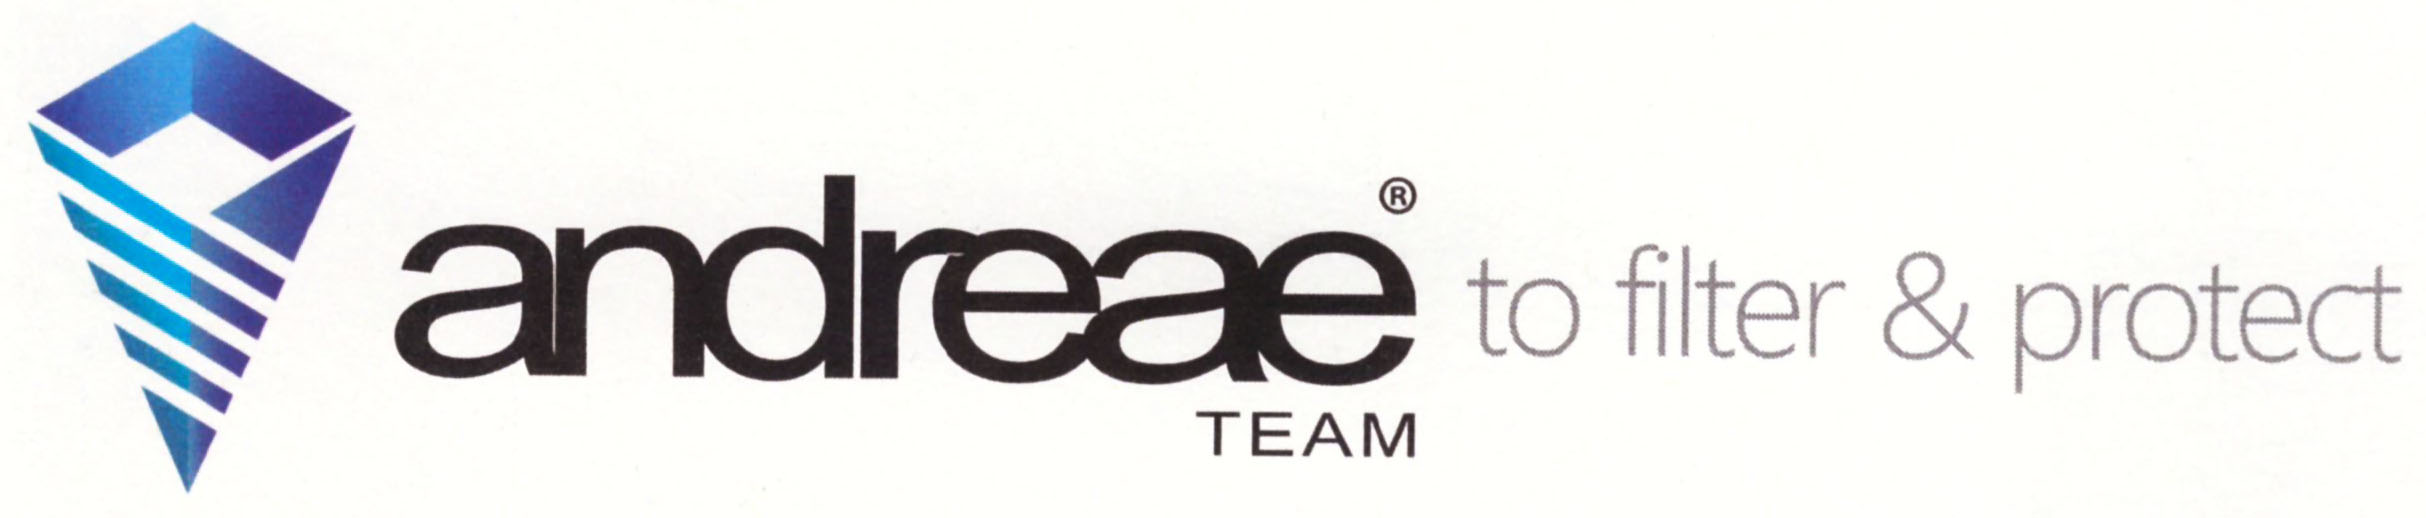 andrea team logo